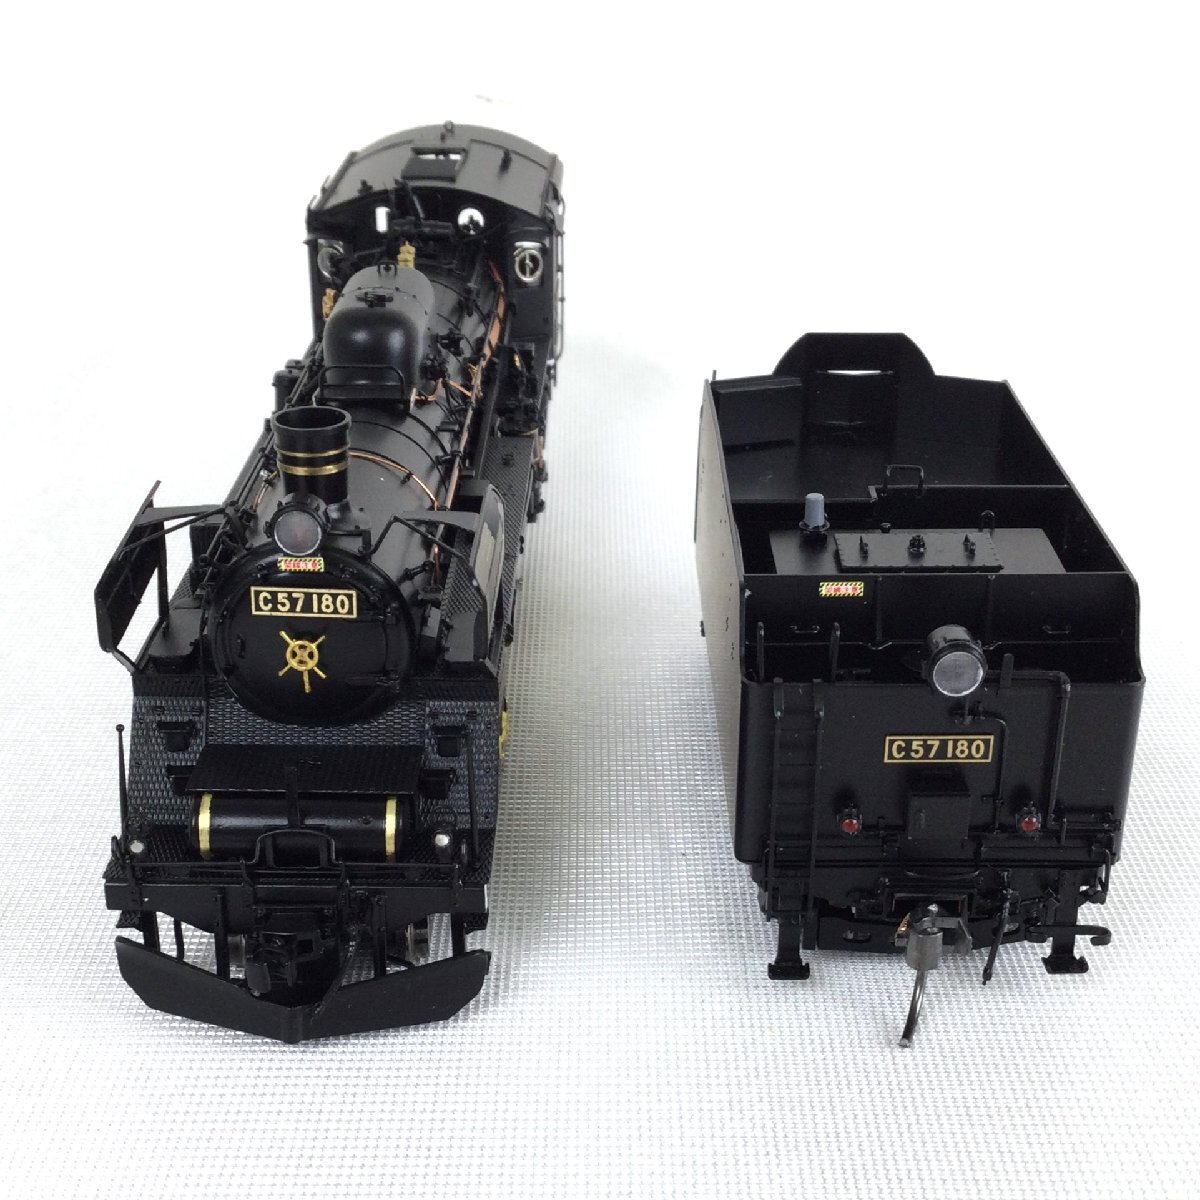 1205 Tenshodo Tenshodo No.11032 National Railways steam locomotiv C57 shape 180 serial number . diff specification railroad model HO gauge display case attaching 